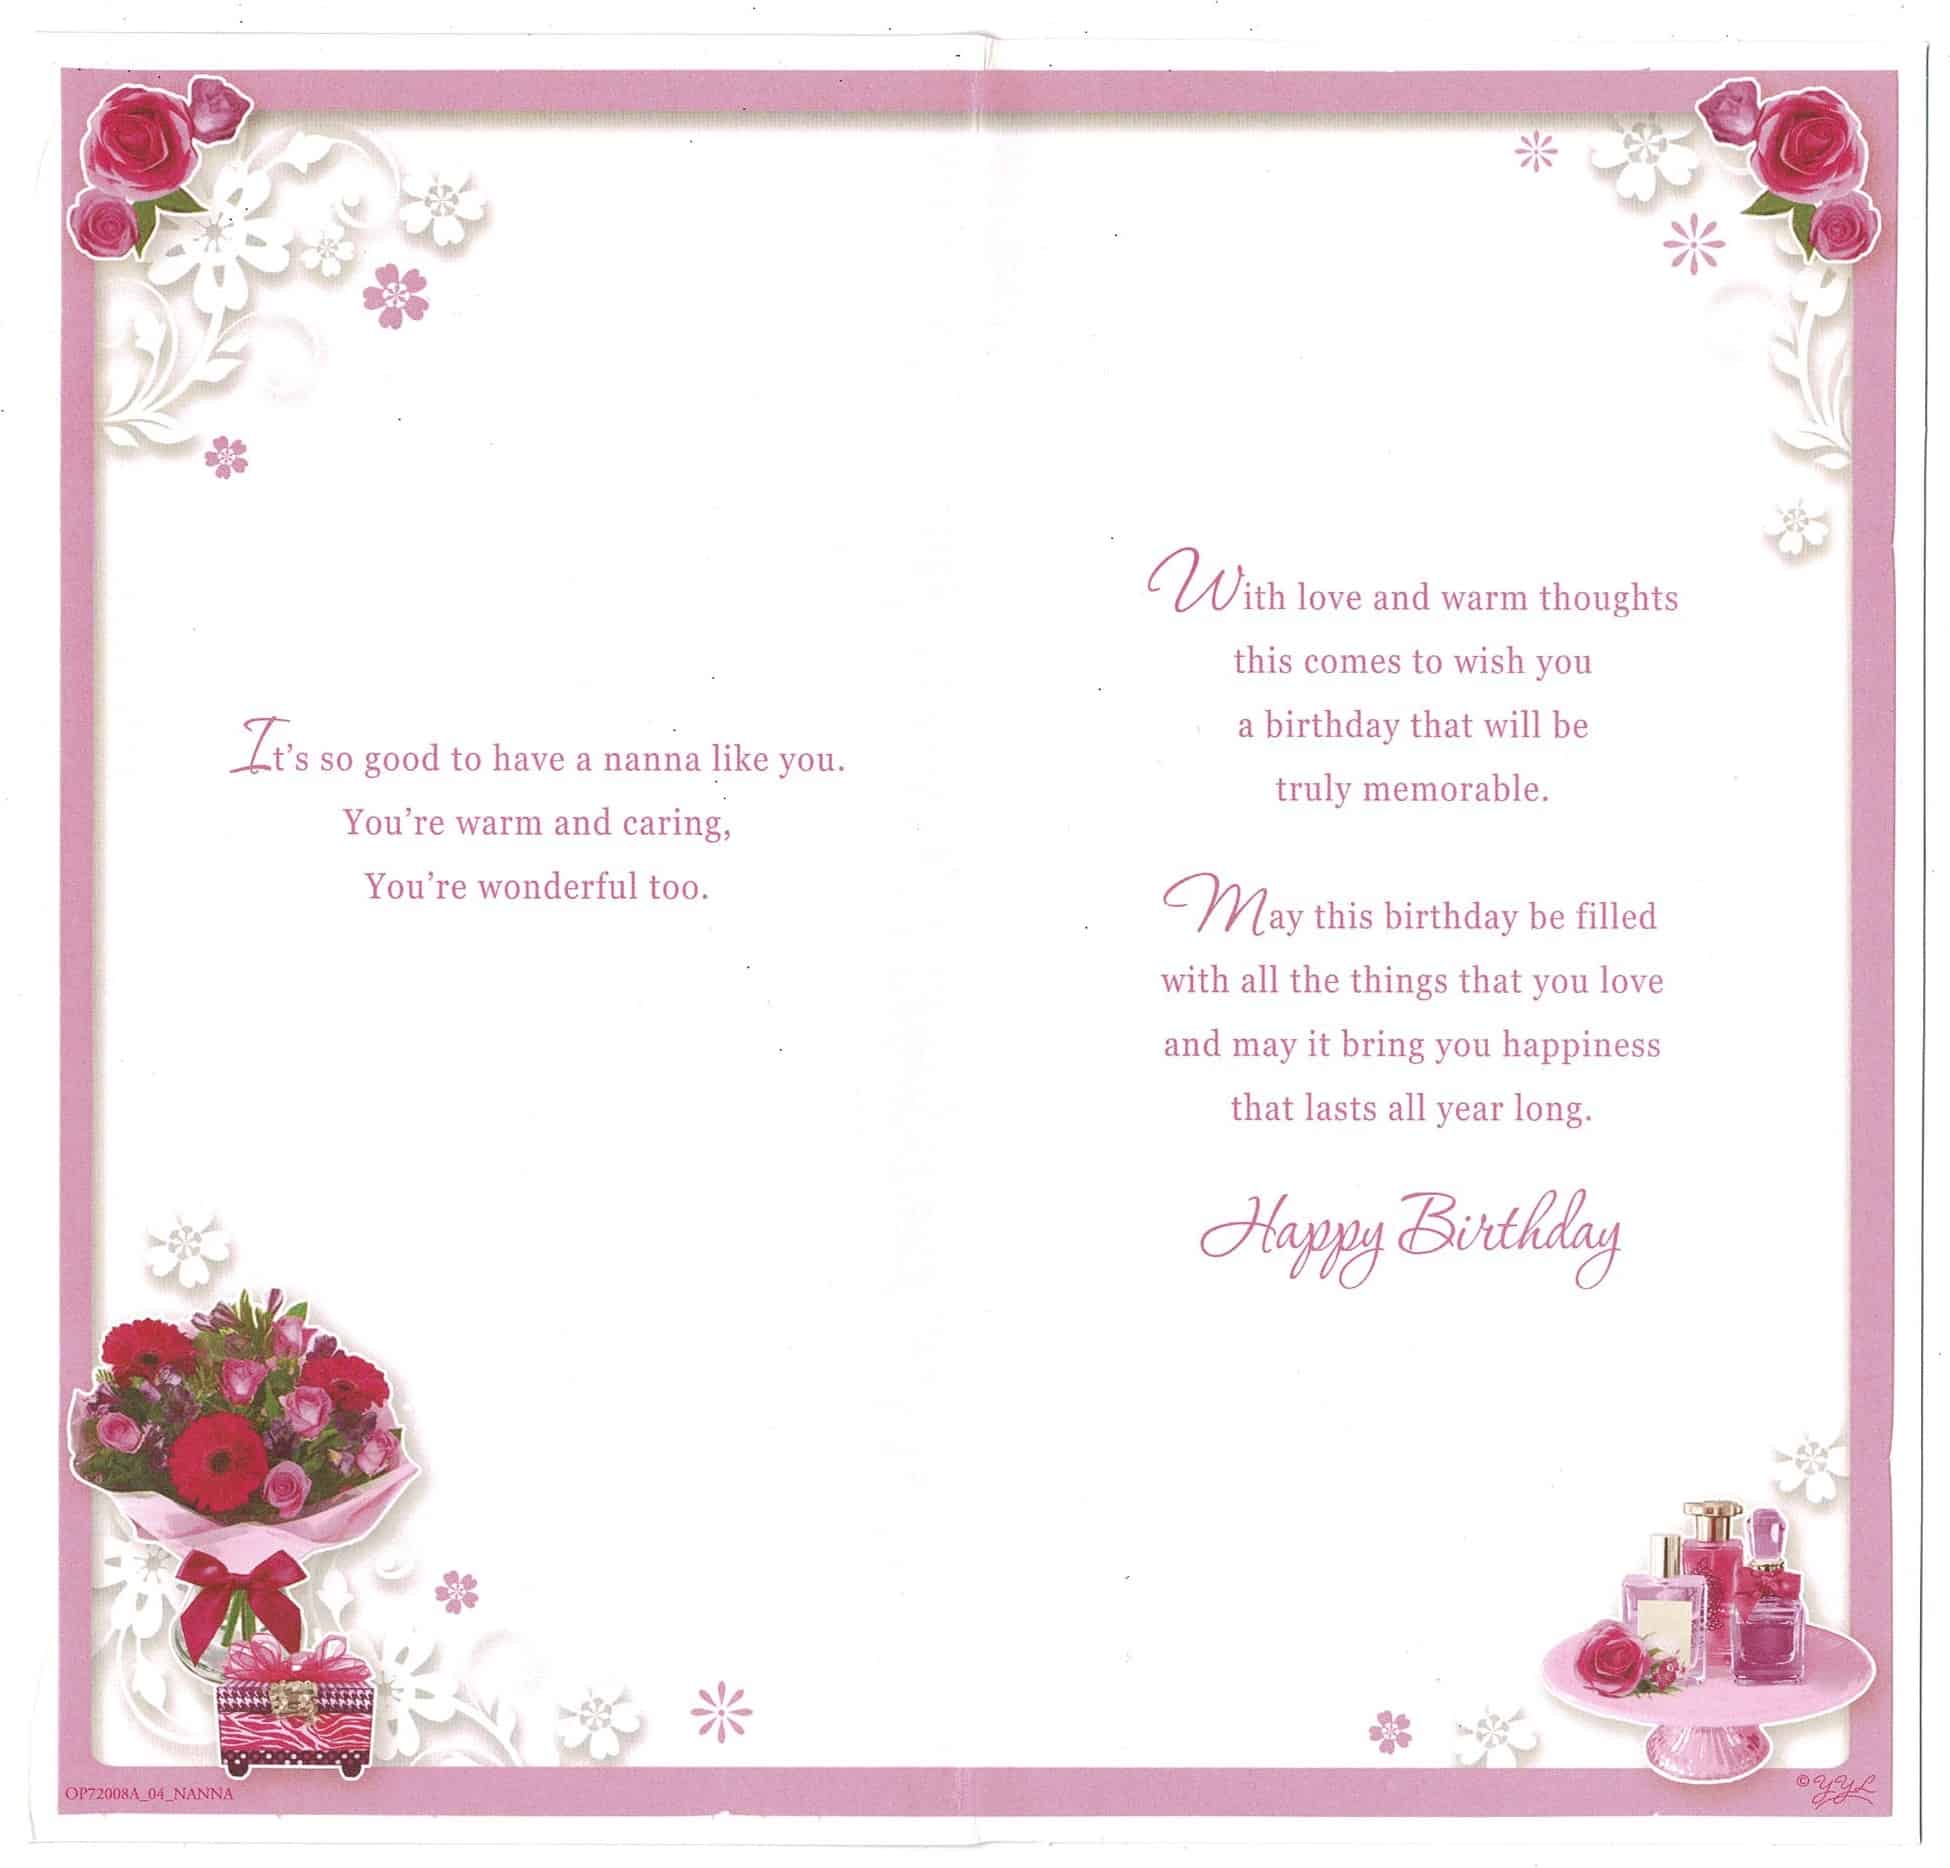 Details about   Happy Birthday Nanna Card Flowers Sentiment Verse Envelope Inc Pink Dear